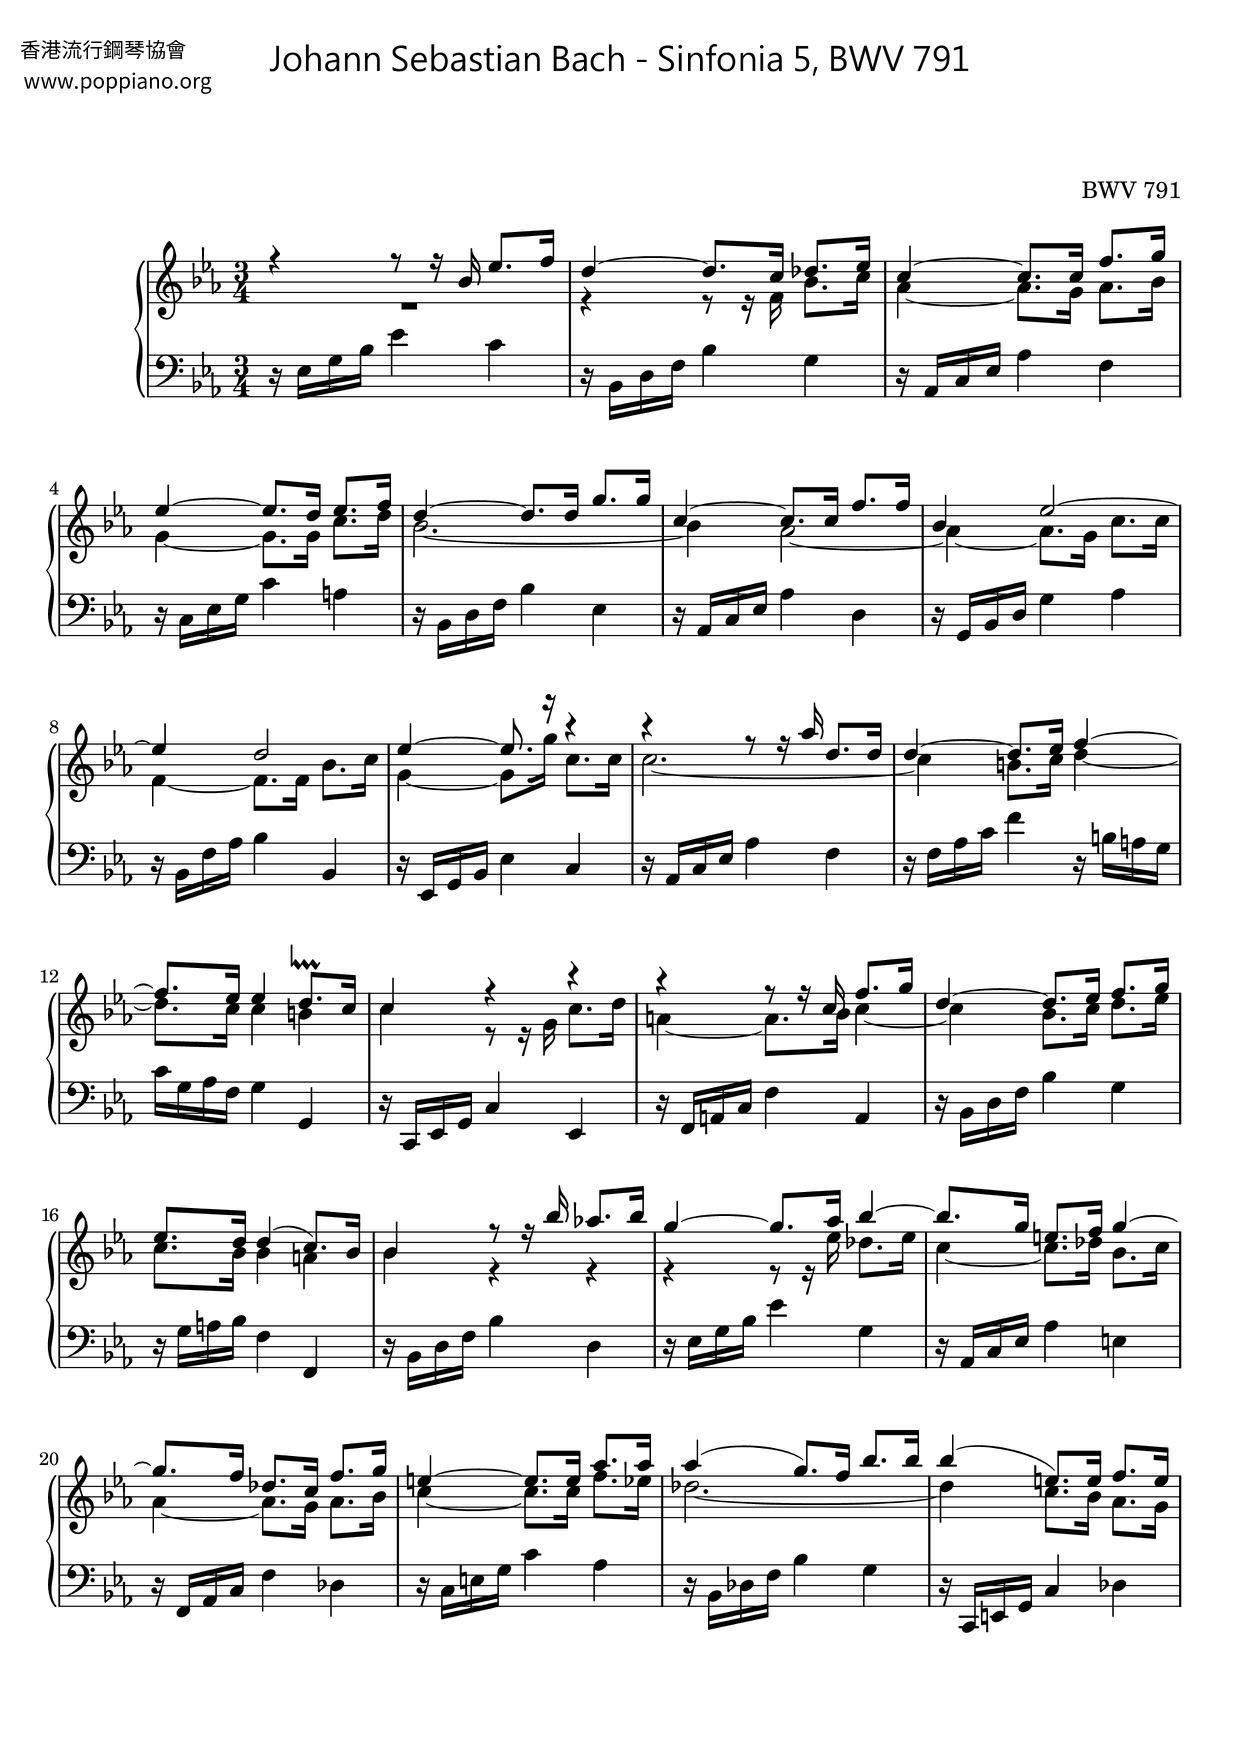 Sinfonia 5, BWV 791 Score